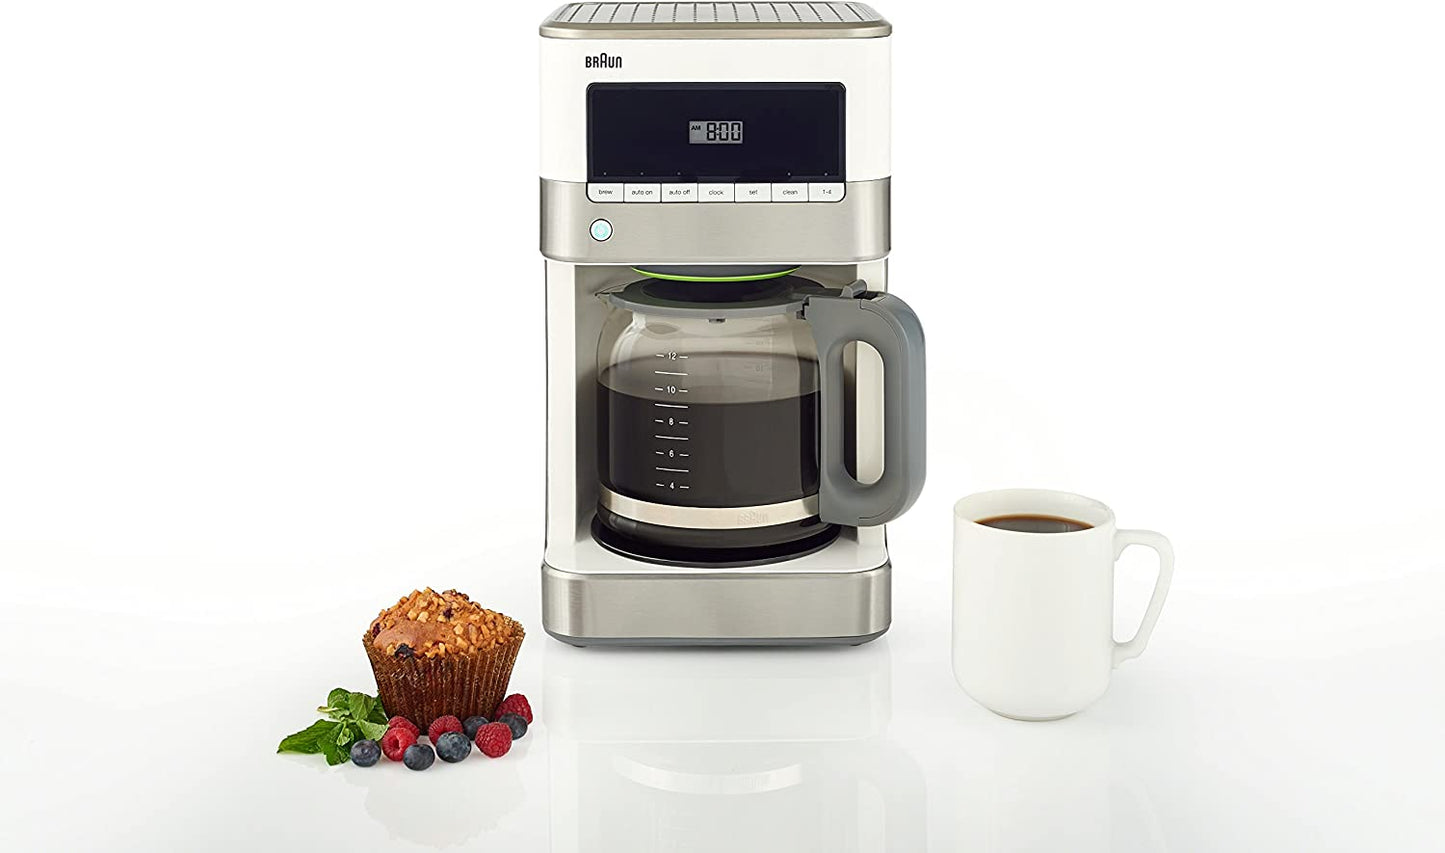 Cafetera/Coffee maker programable con filtro permante.  Braun BrewSense. Marca alemana.